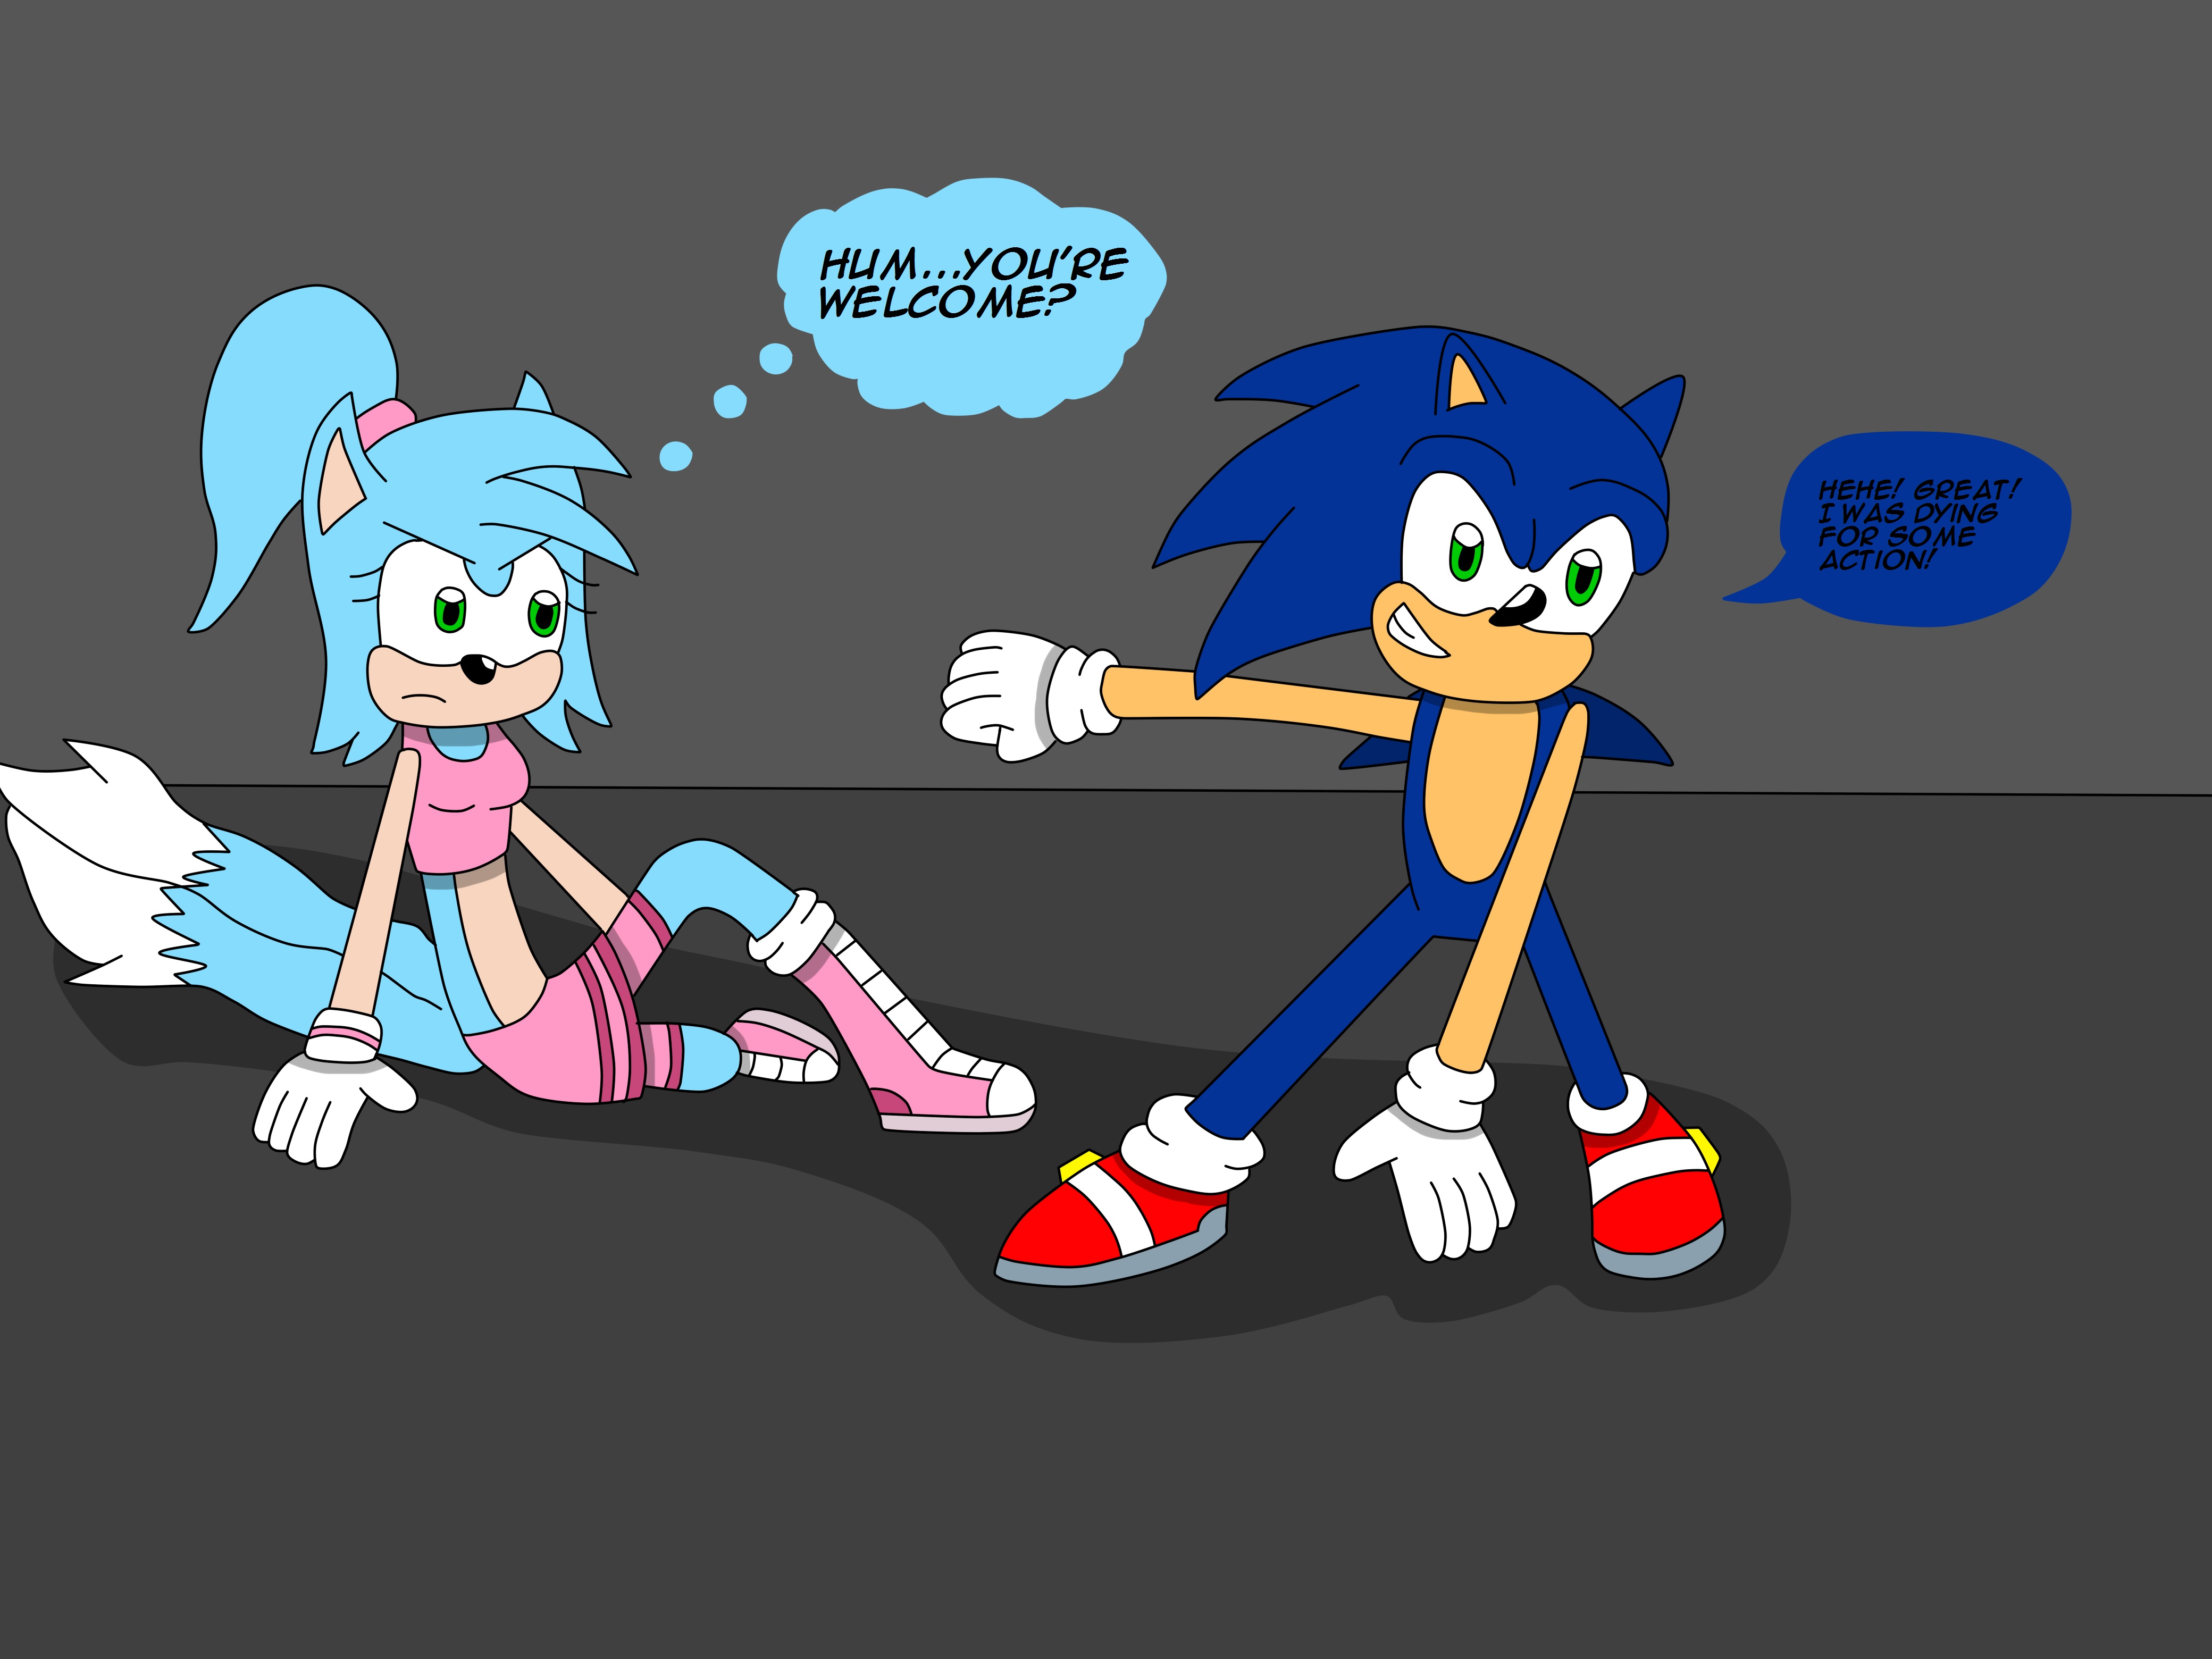 Sonic the Hedgehog Meets SNT by BlueandDark on DeviantArt.